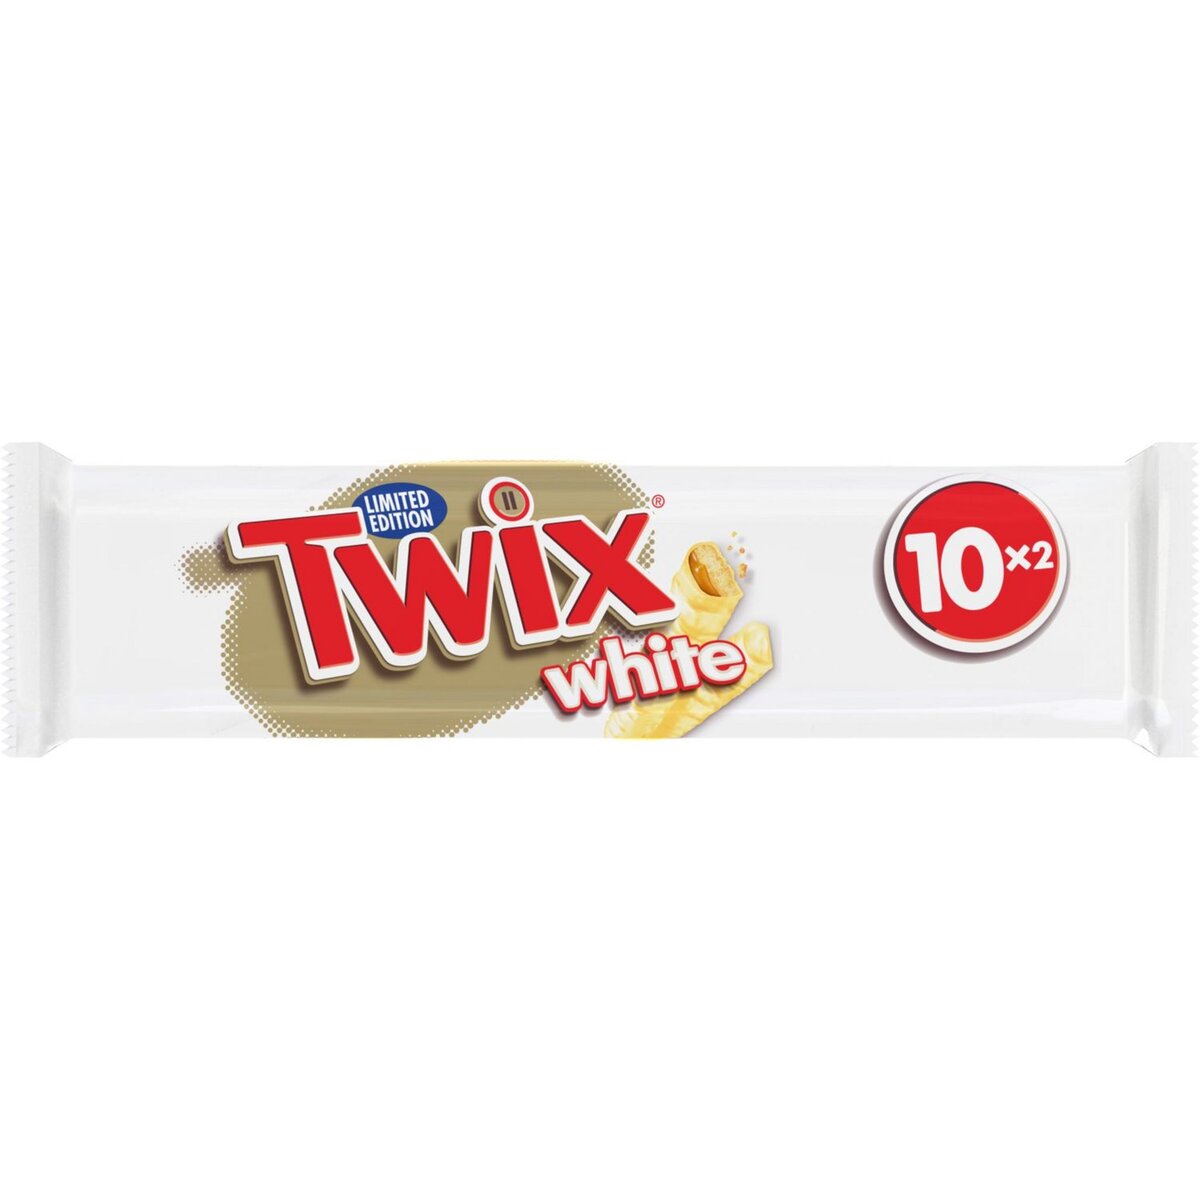 TWIX Twix white x10 -460g